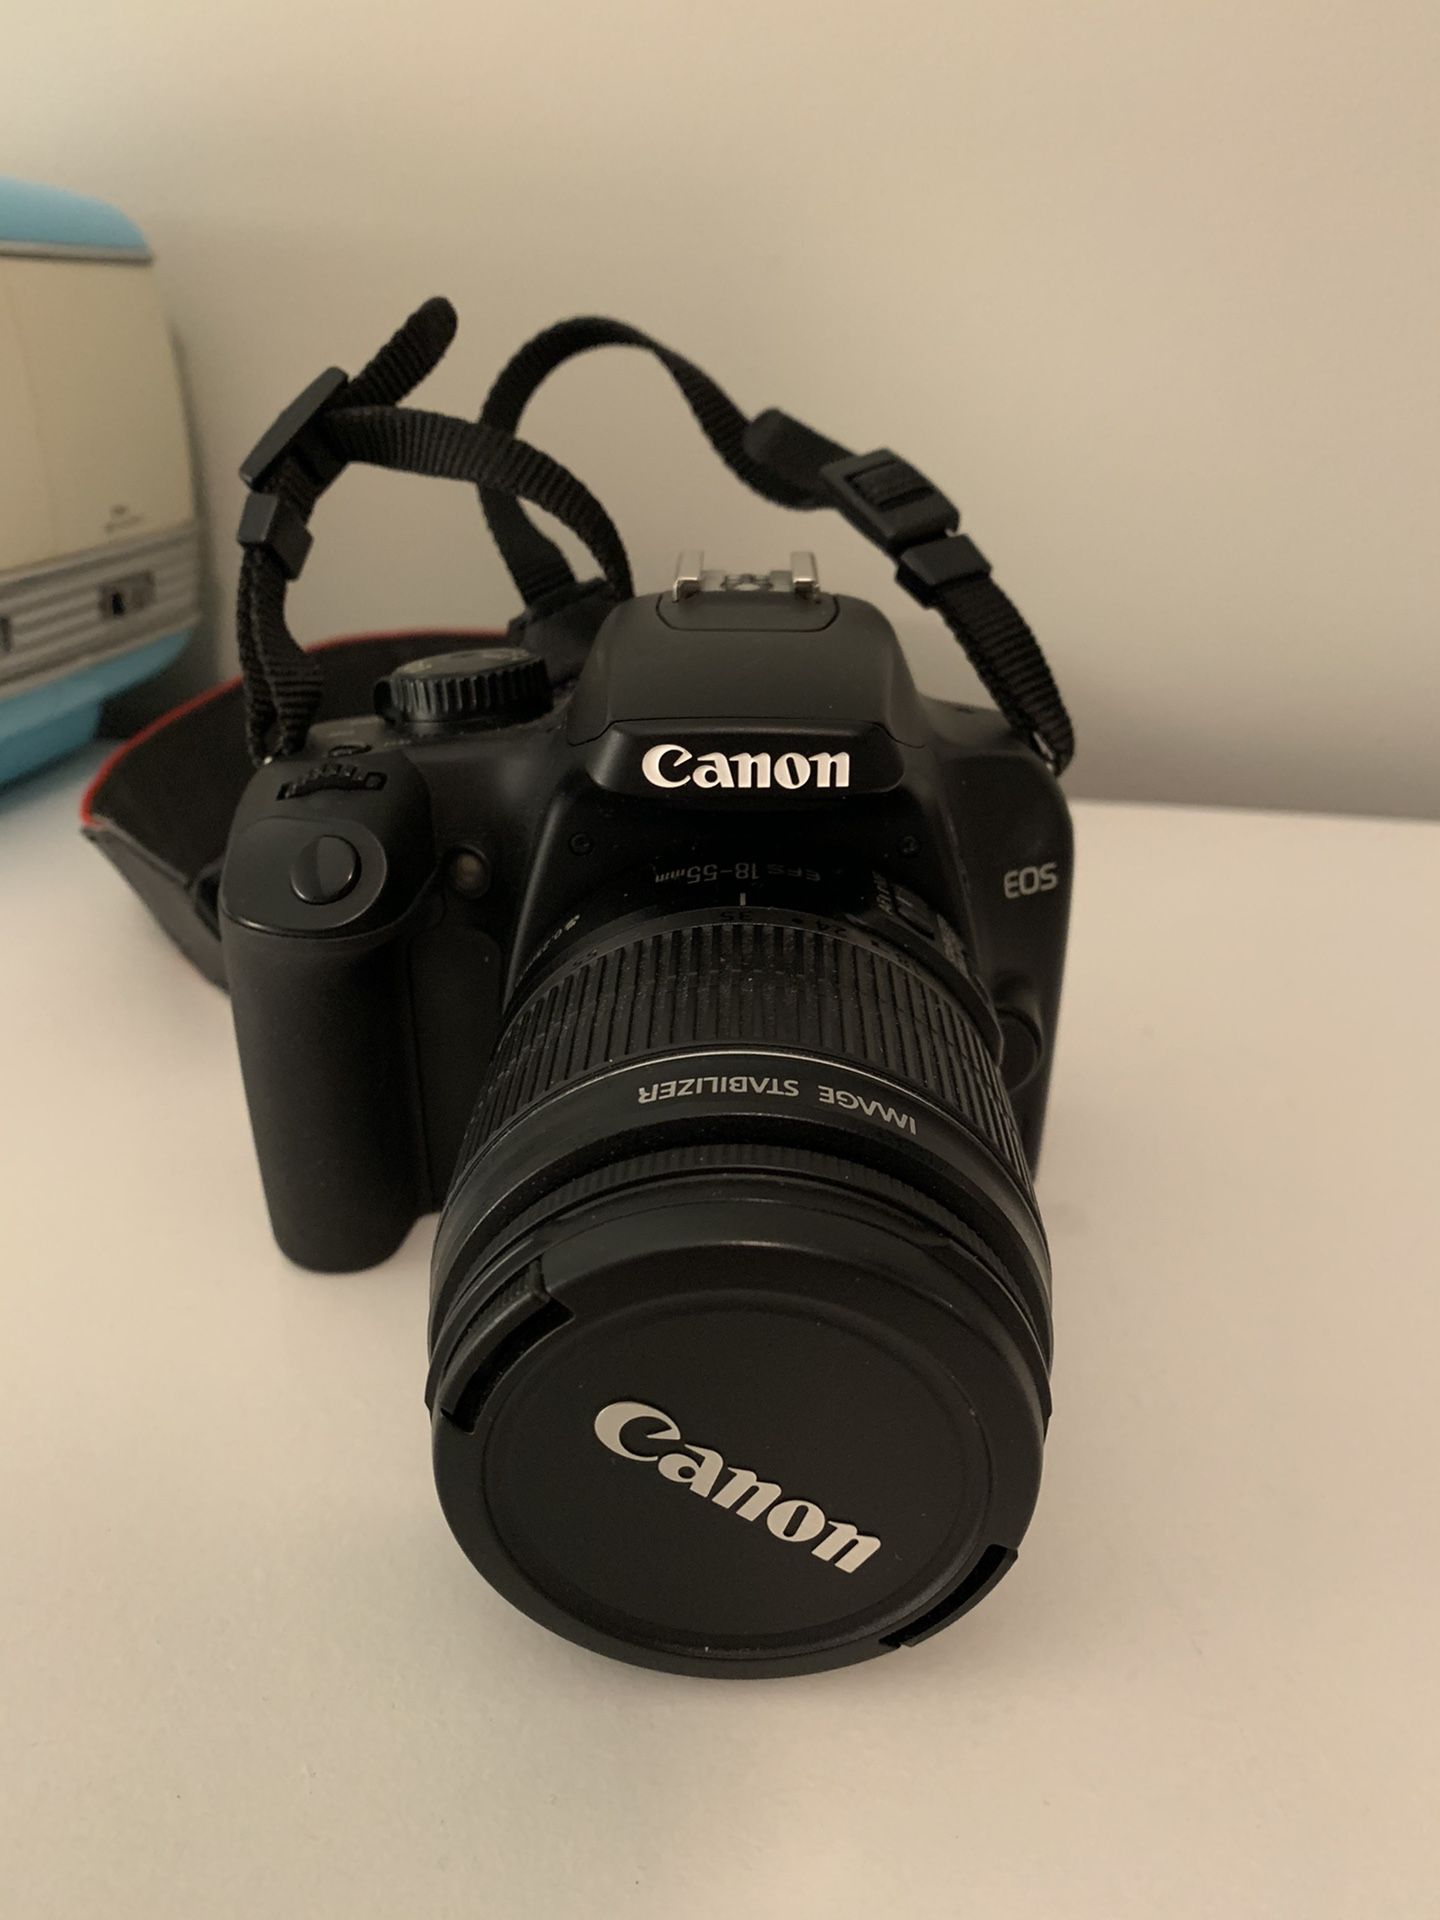 Canon rebel xs digital SLR camera